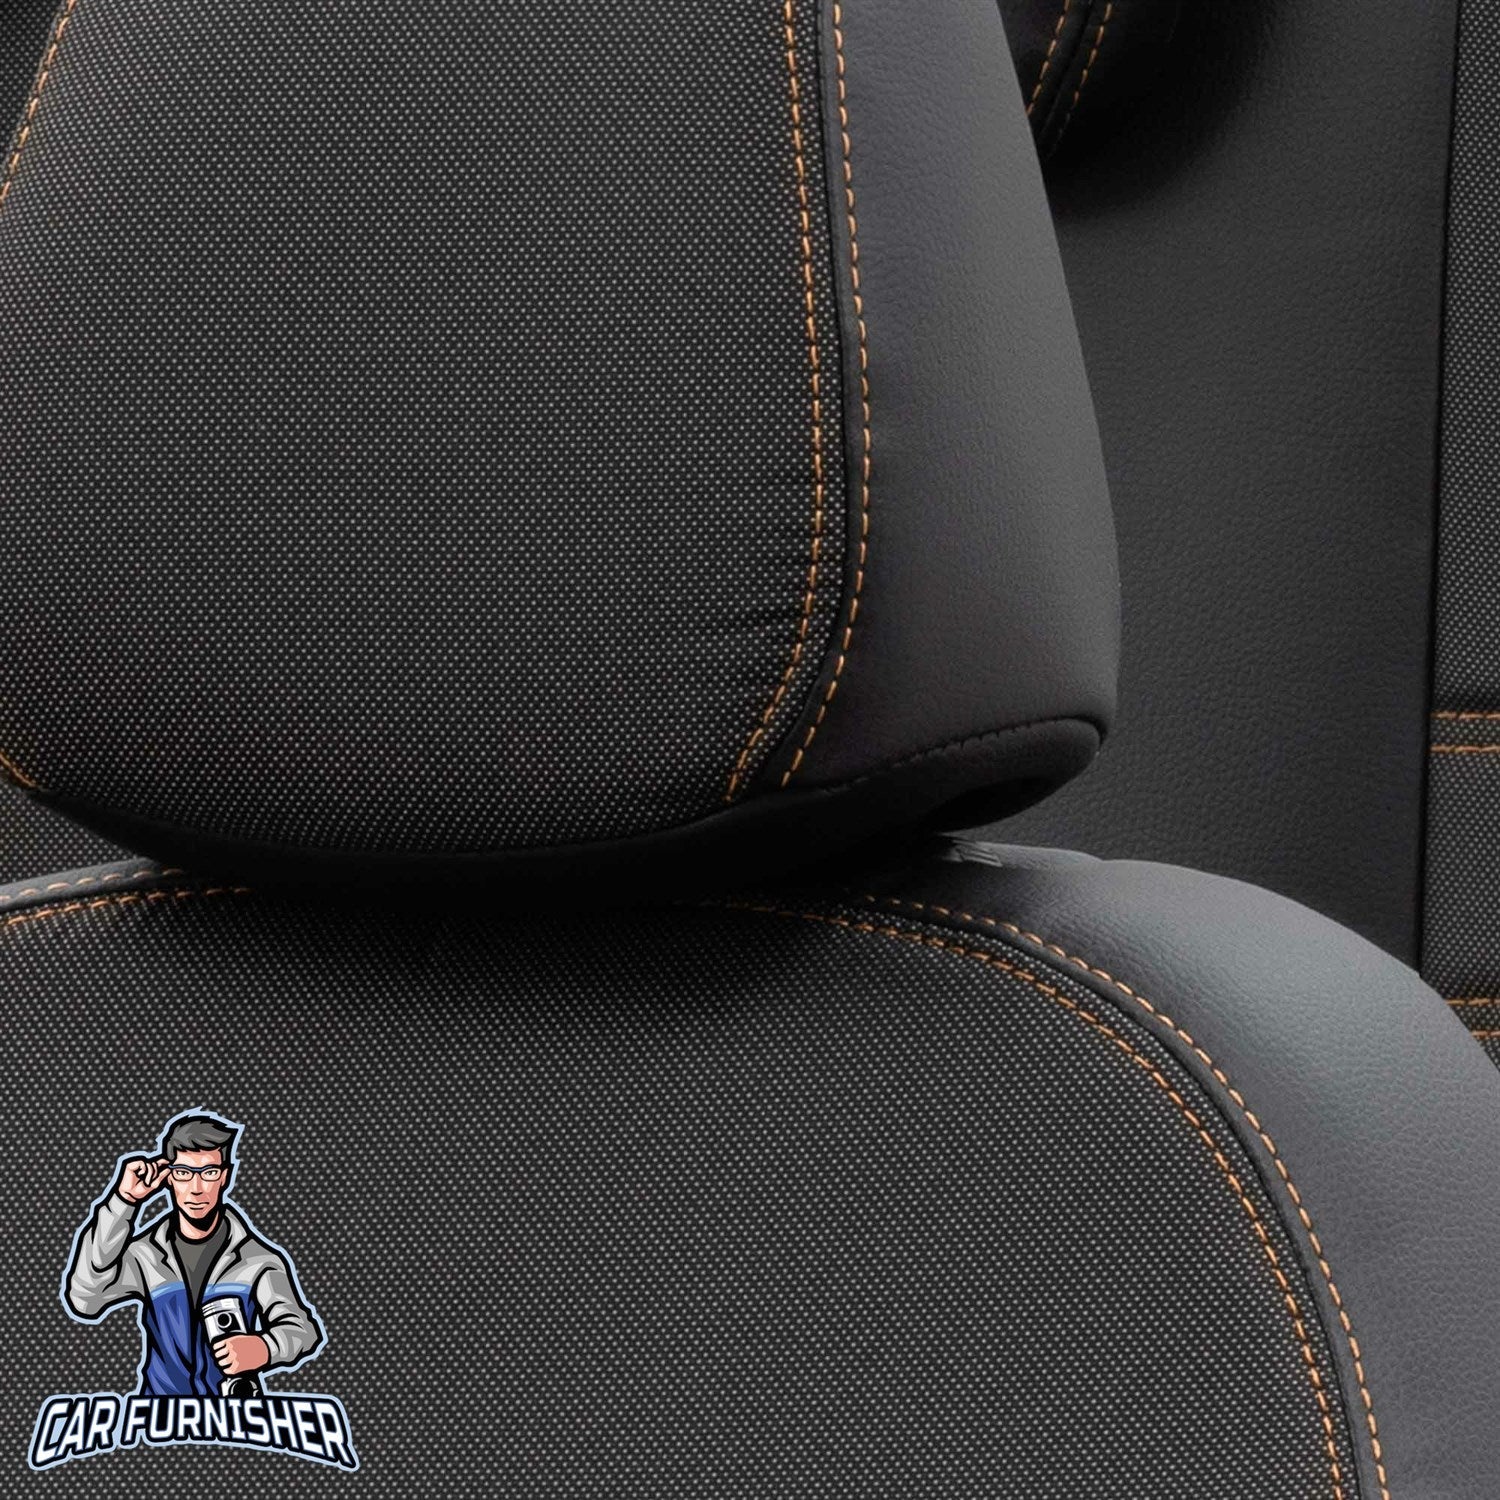 Kia Sportage Seat Covers Paris Leather & Jacquard Design Dark Beige Leather & Jacquard Fabric